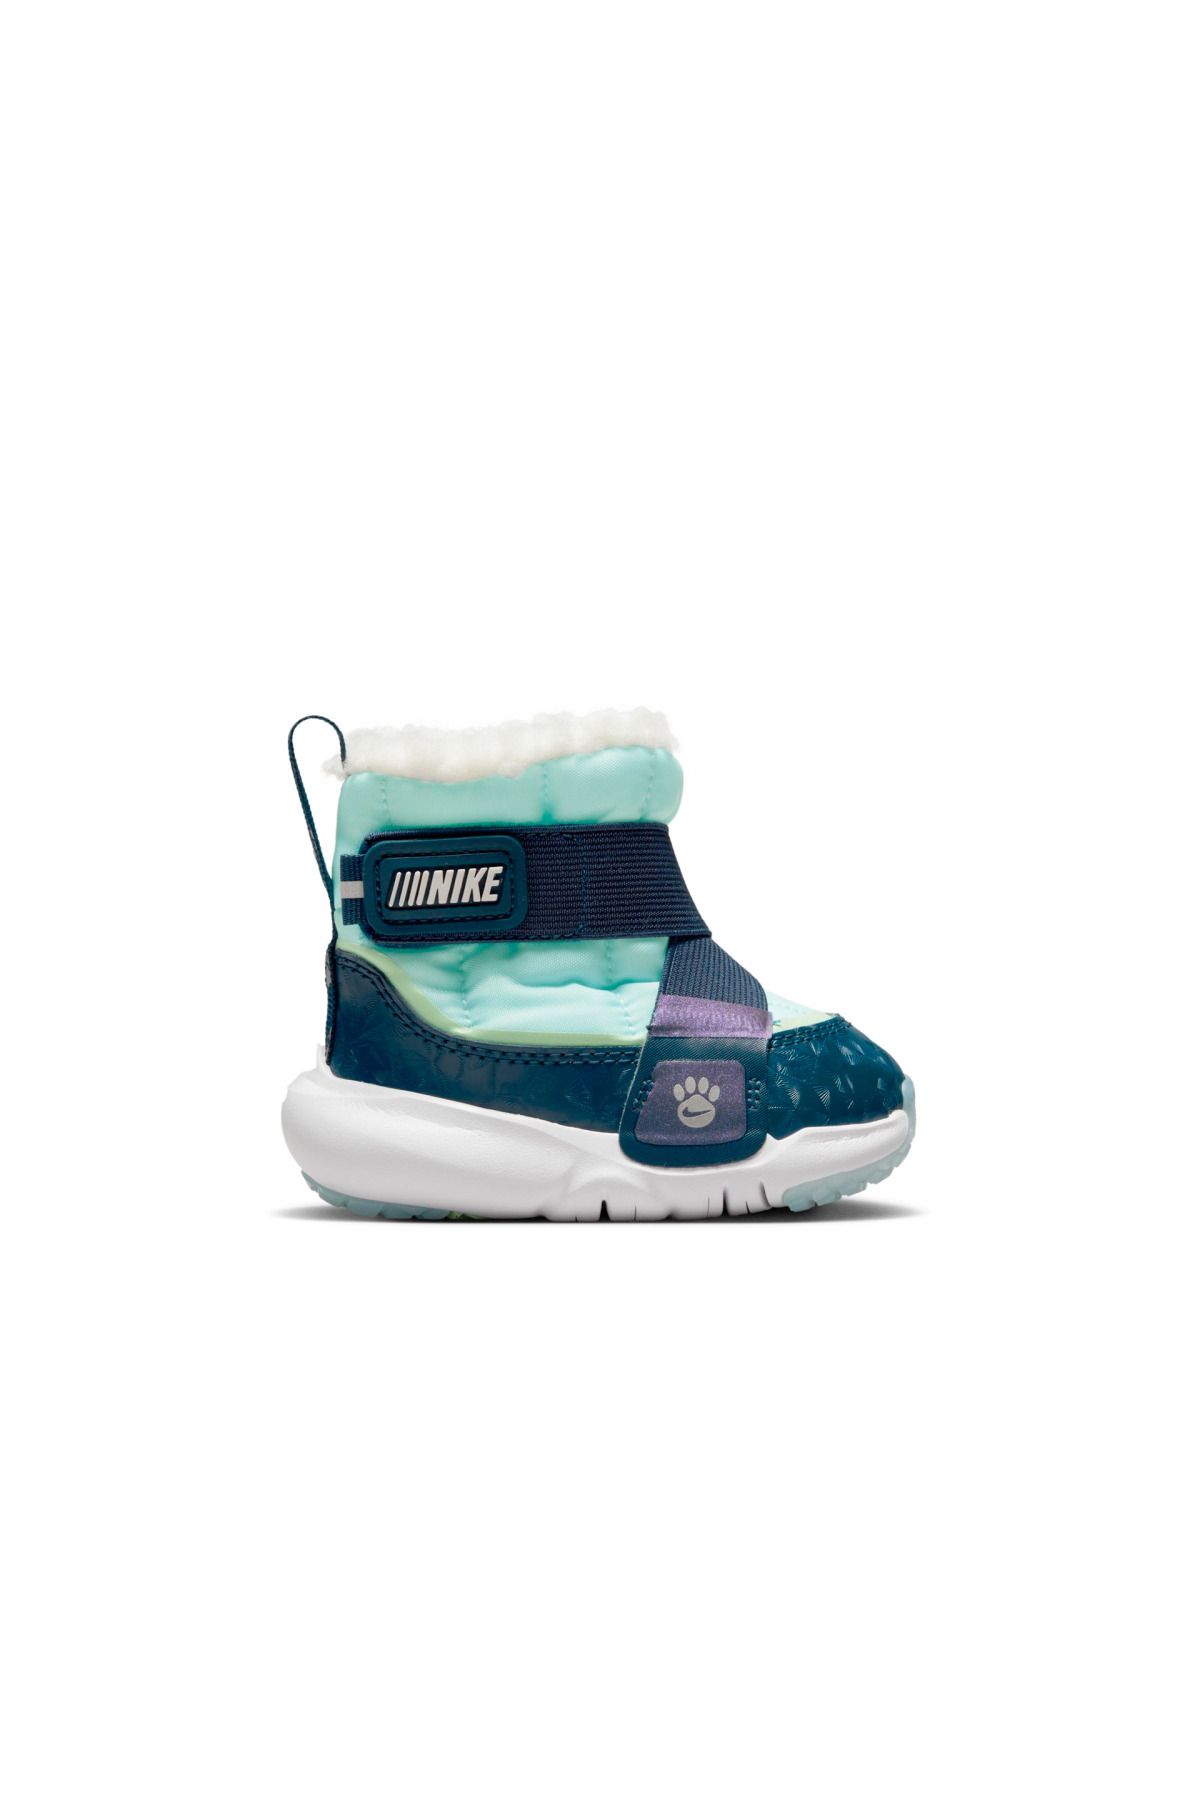 Nike Flex Advance SE Baby/Toddler Boot